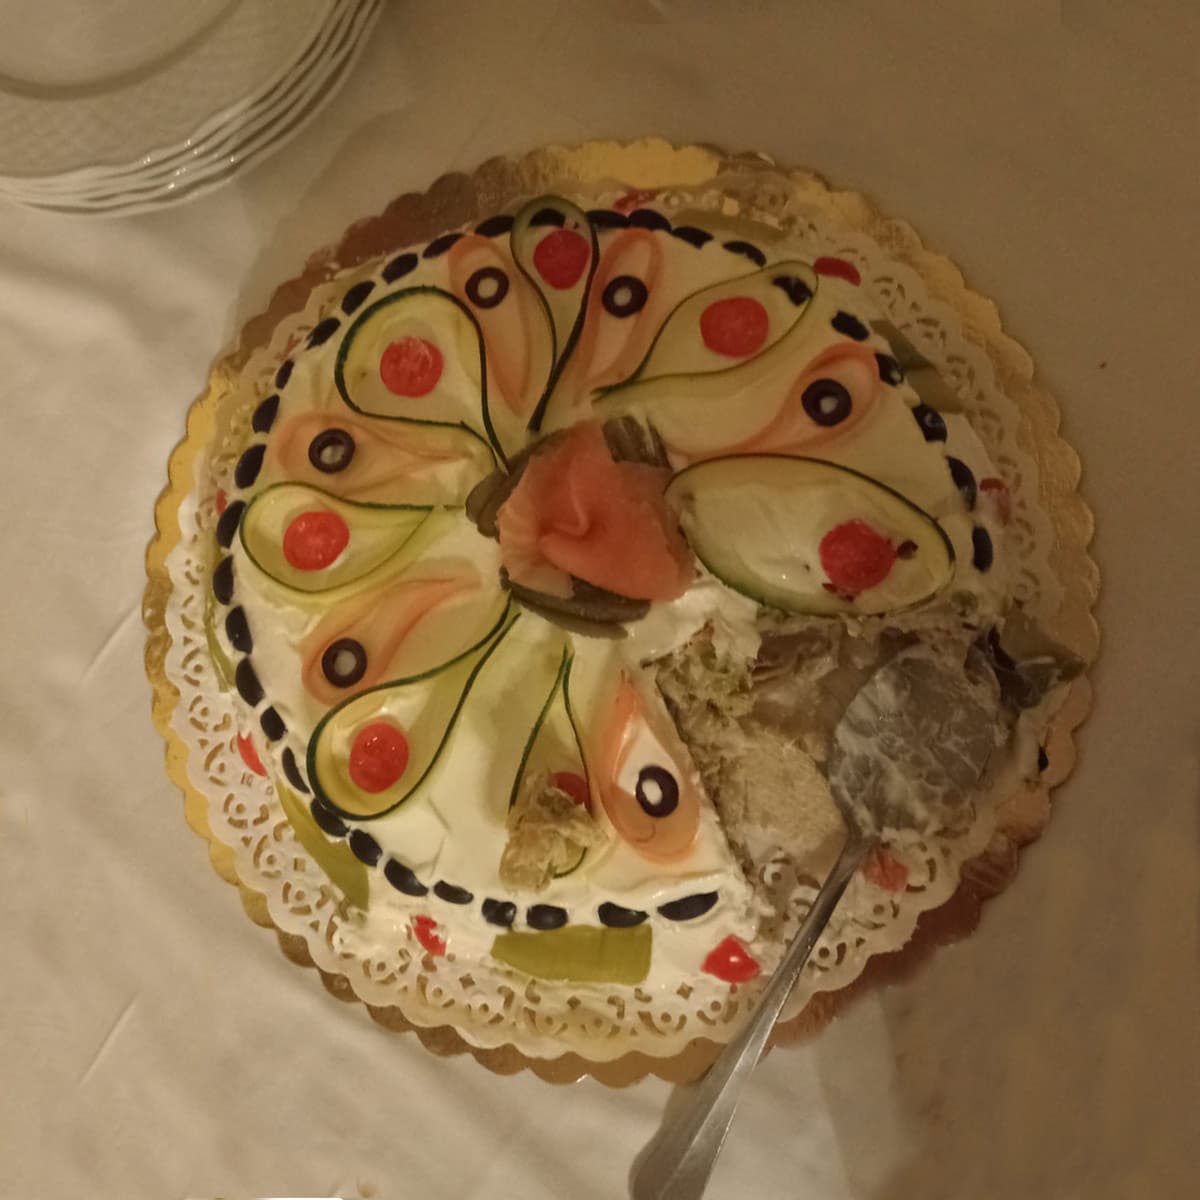 Russian salad with gelatin shaped like a cake and a slice cut